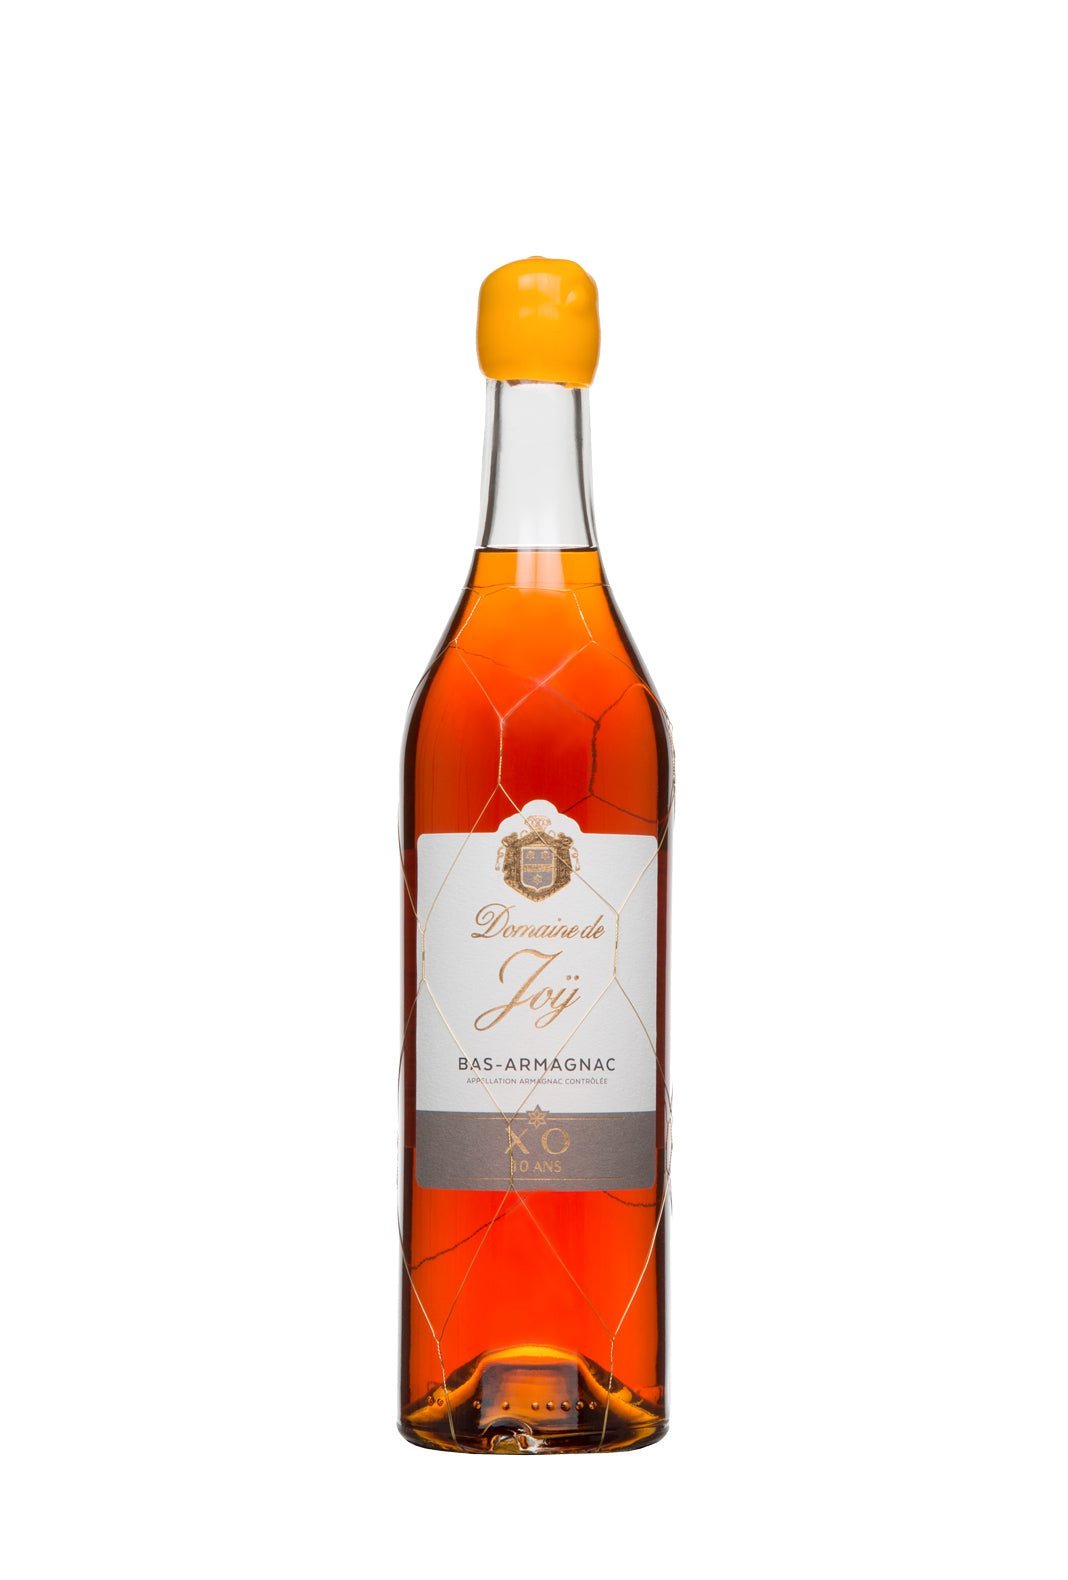 Domaine de Joy Bas Armagnac XO 10 years 40.5% 500ml | Brandy | Shop online at Spirits of France